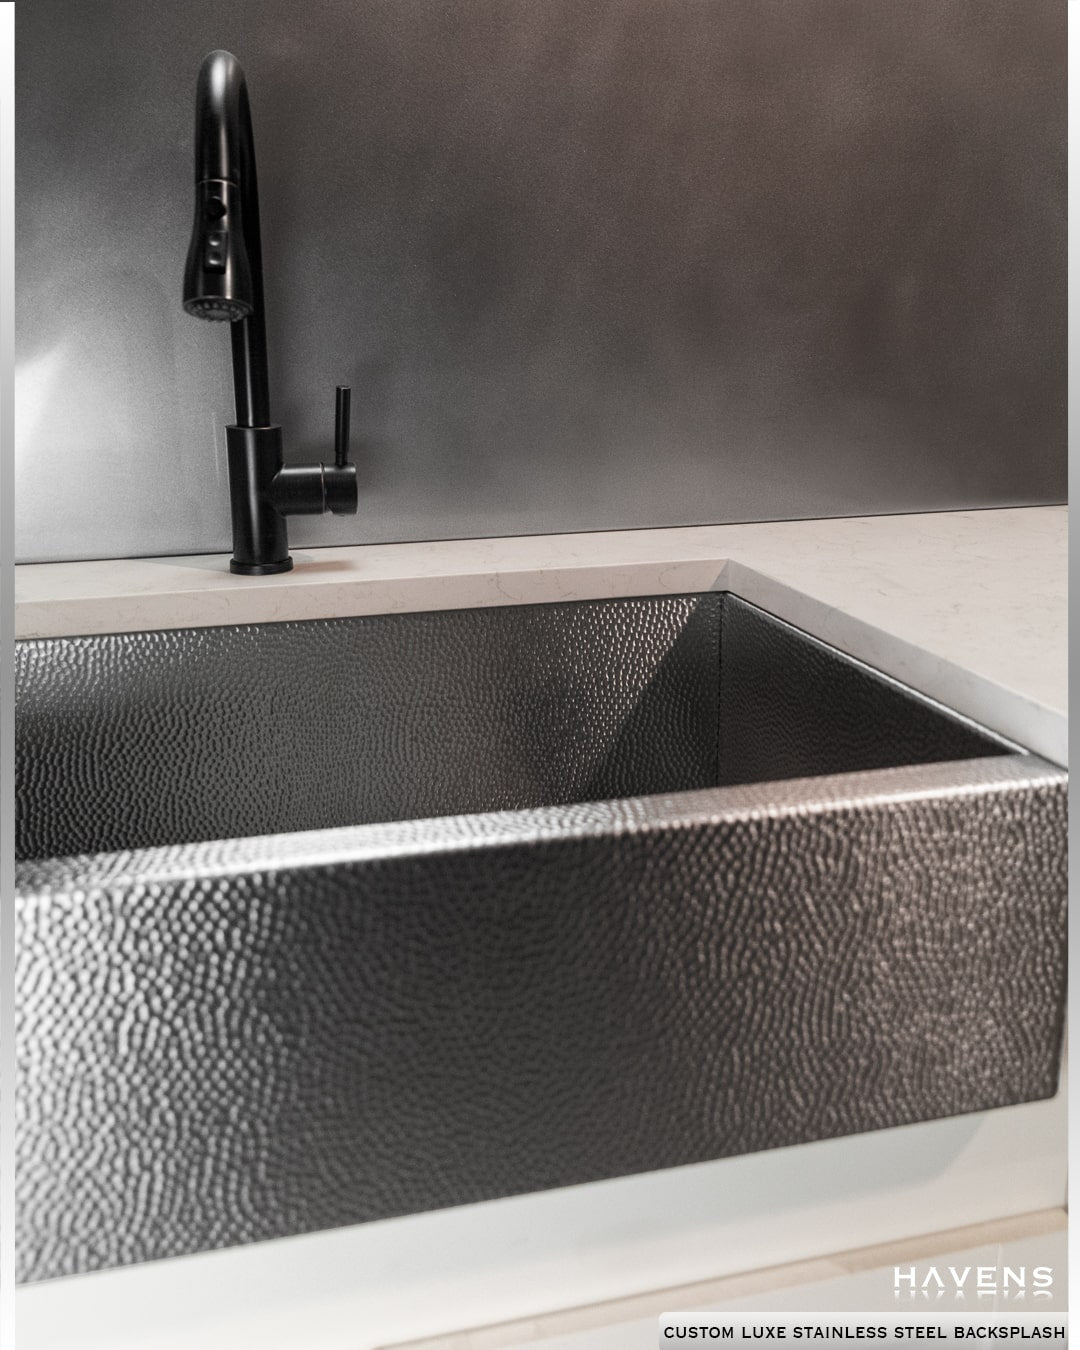 Luxe Stainless Steel Backsplash - Custom Size